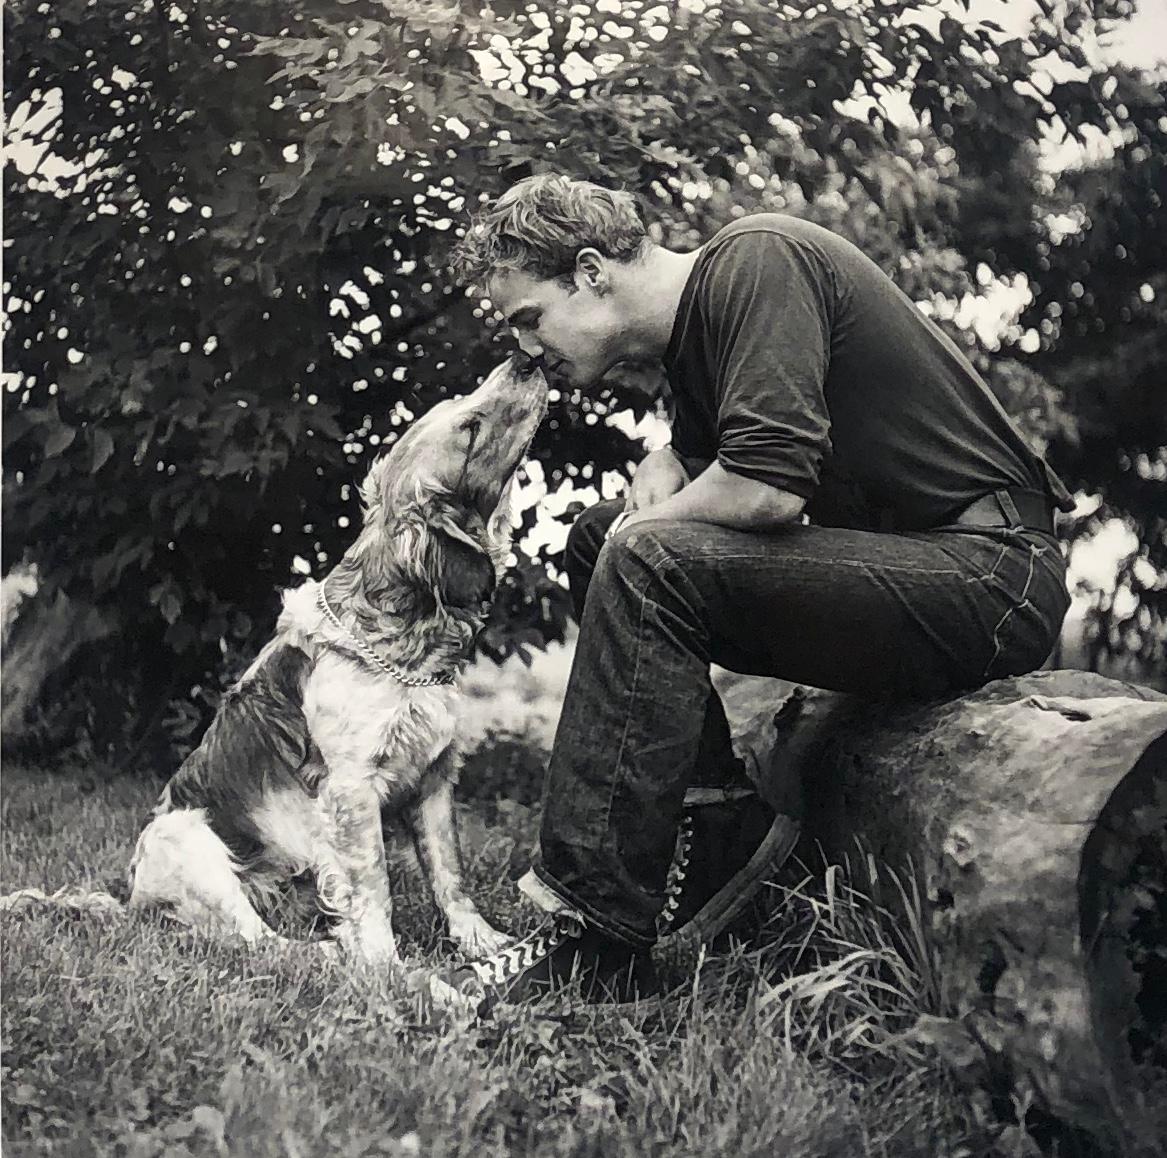 Art Shay Portrait Photograph - Marlon Brando Kissing Dog, Libertyville, IL 1950 - Black & White Photograph